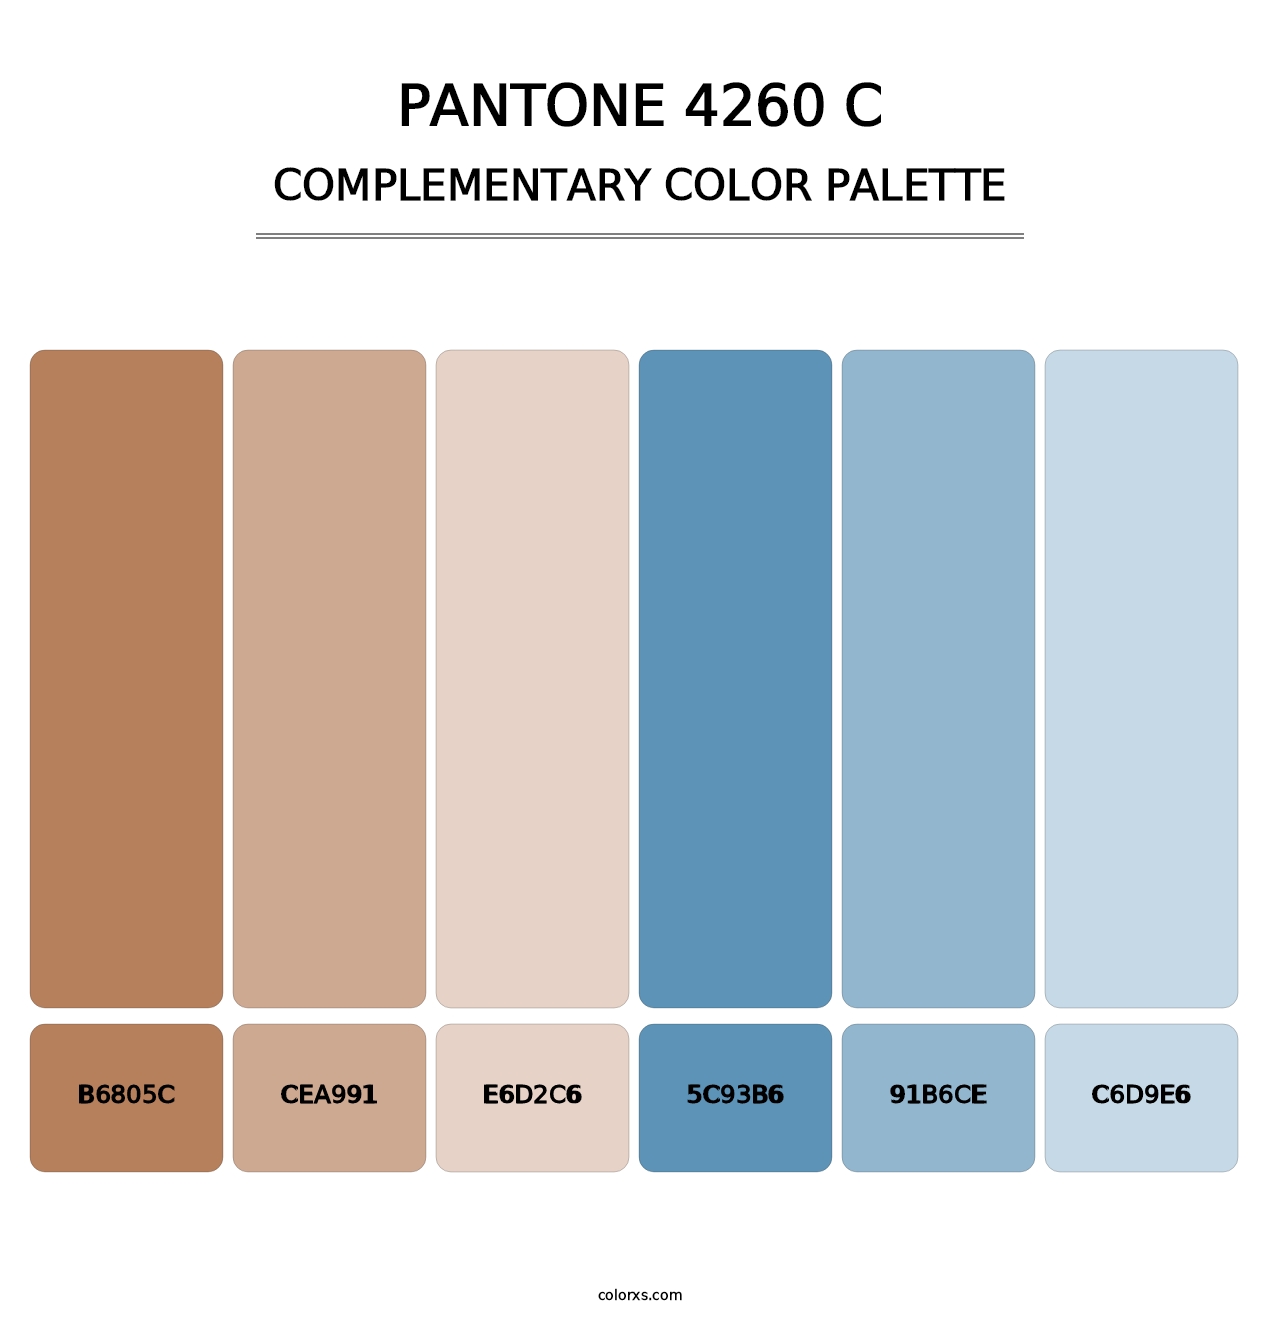 PANTONE 4260 C - Complementary Color Palette